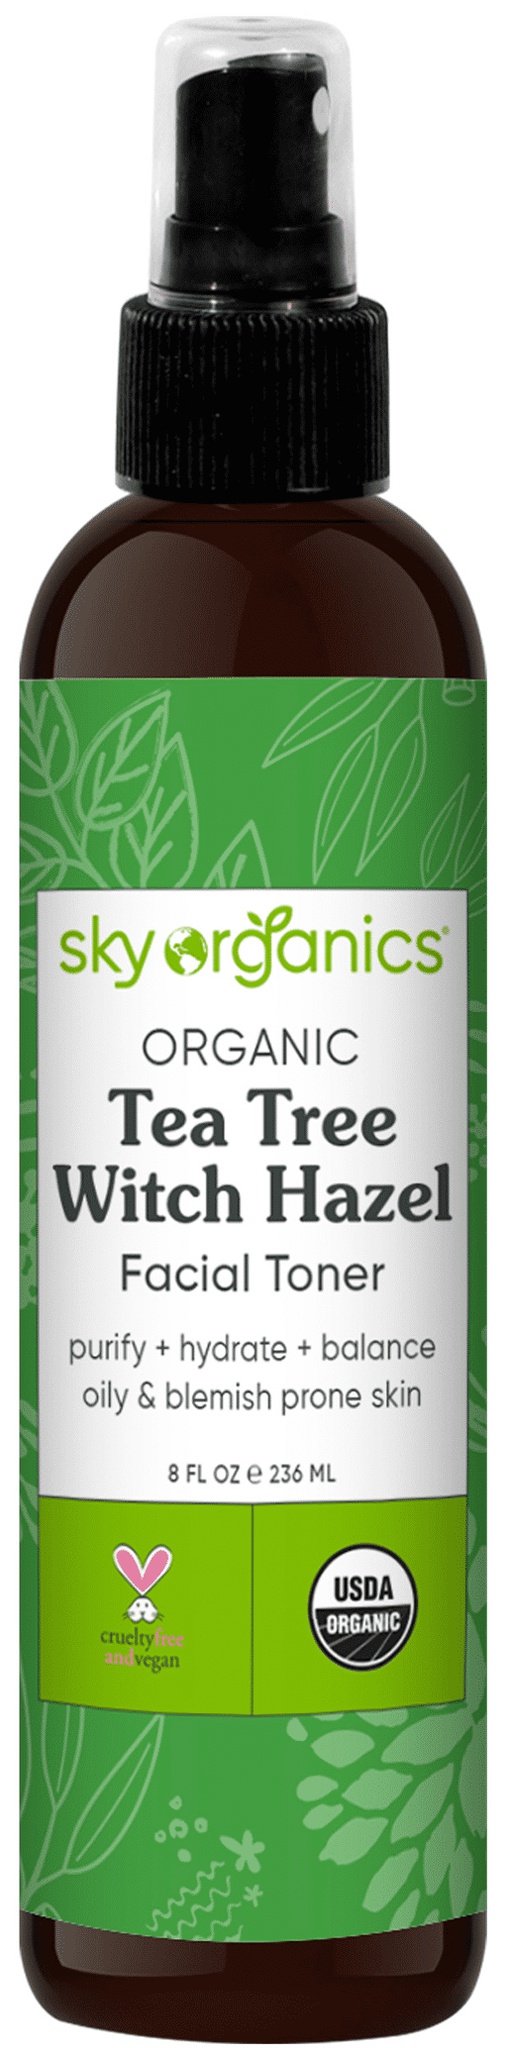 Sky Organics Organic Tea Tree Witch Hazel Toner